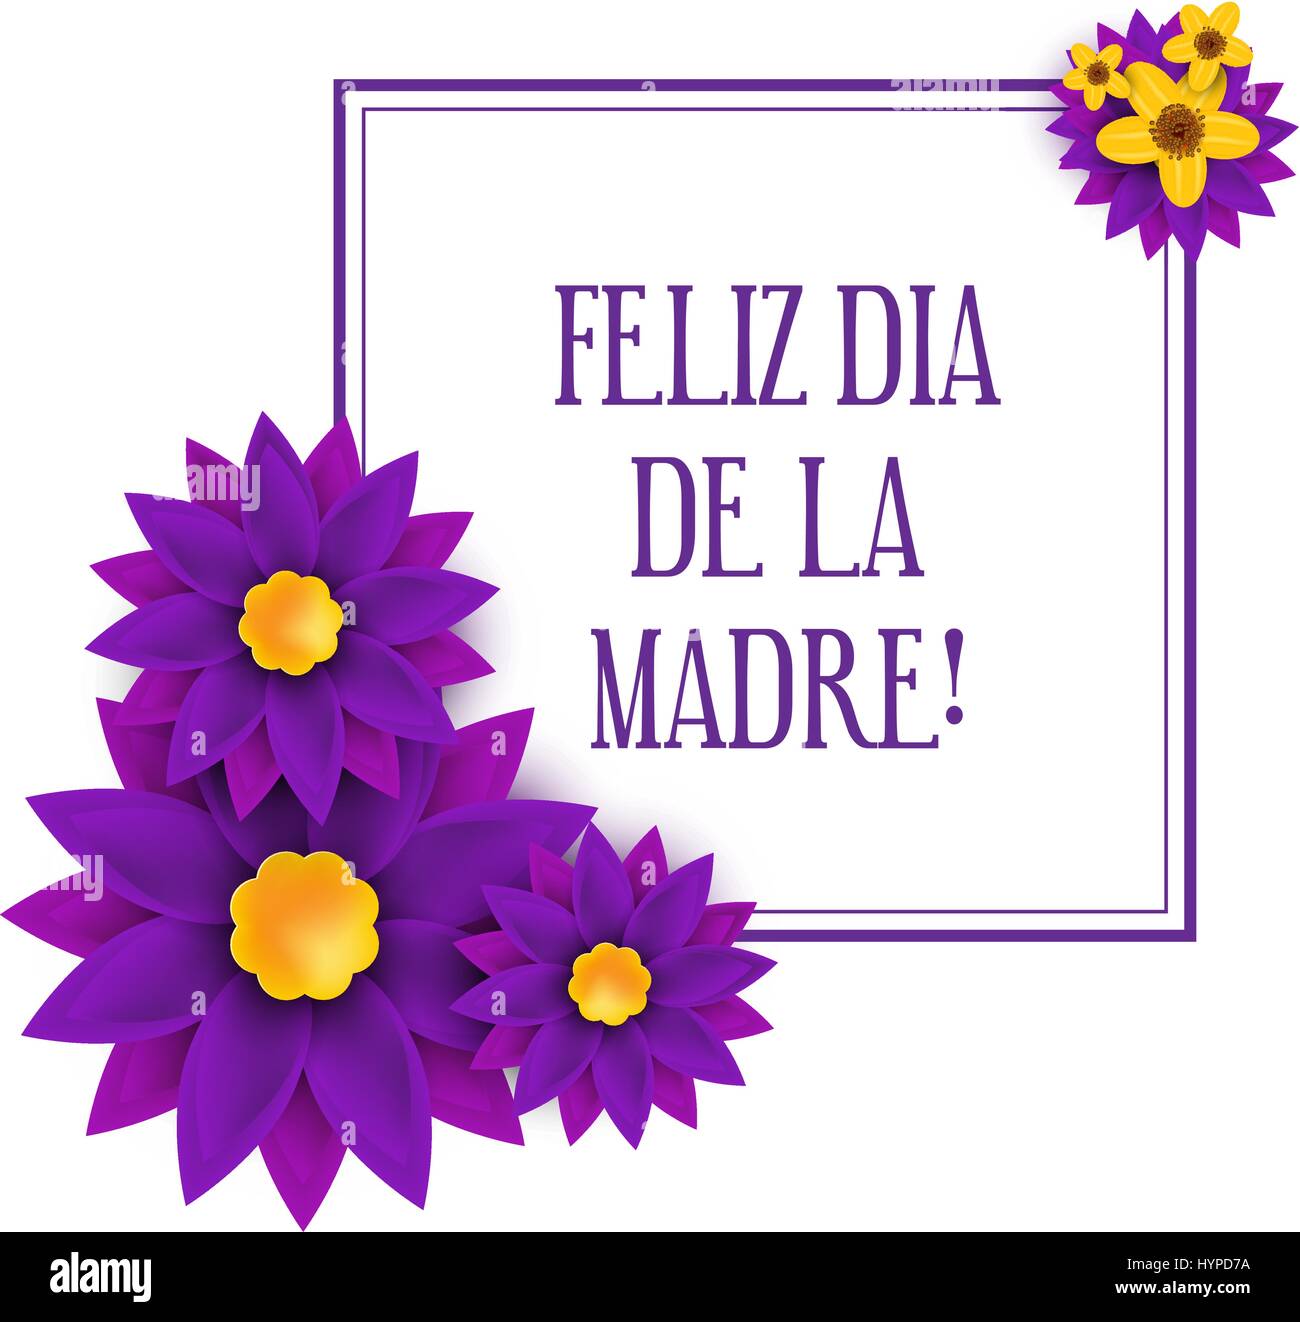 Feliz dia de la madre hi-res stock photography and images - Alamy